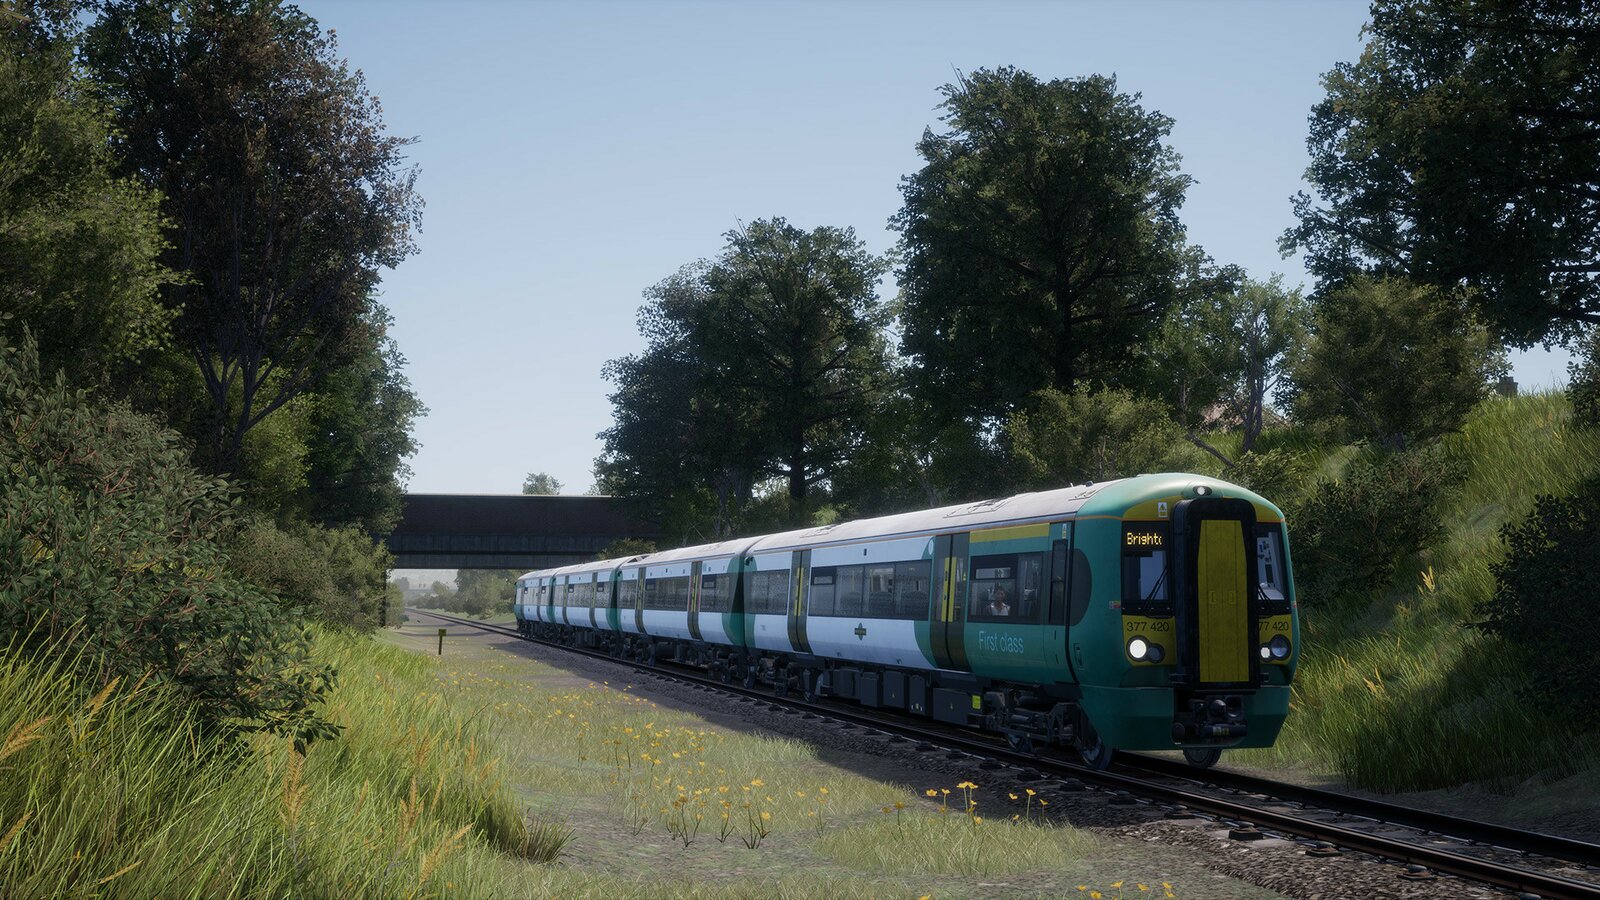 Train Sim World 2 - East Coastway: Brighton - Eastbourne & Seaford Route